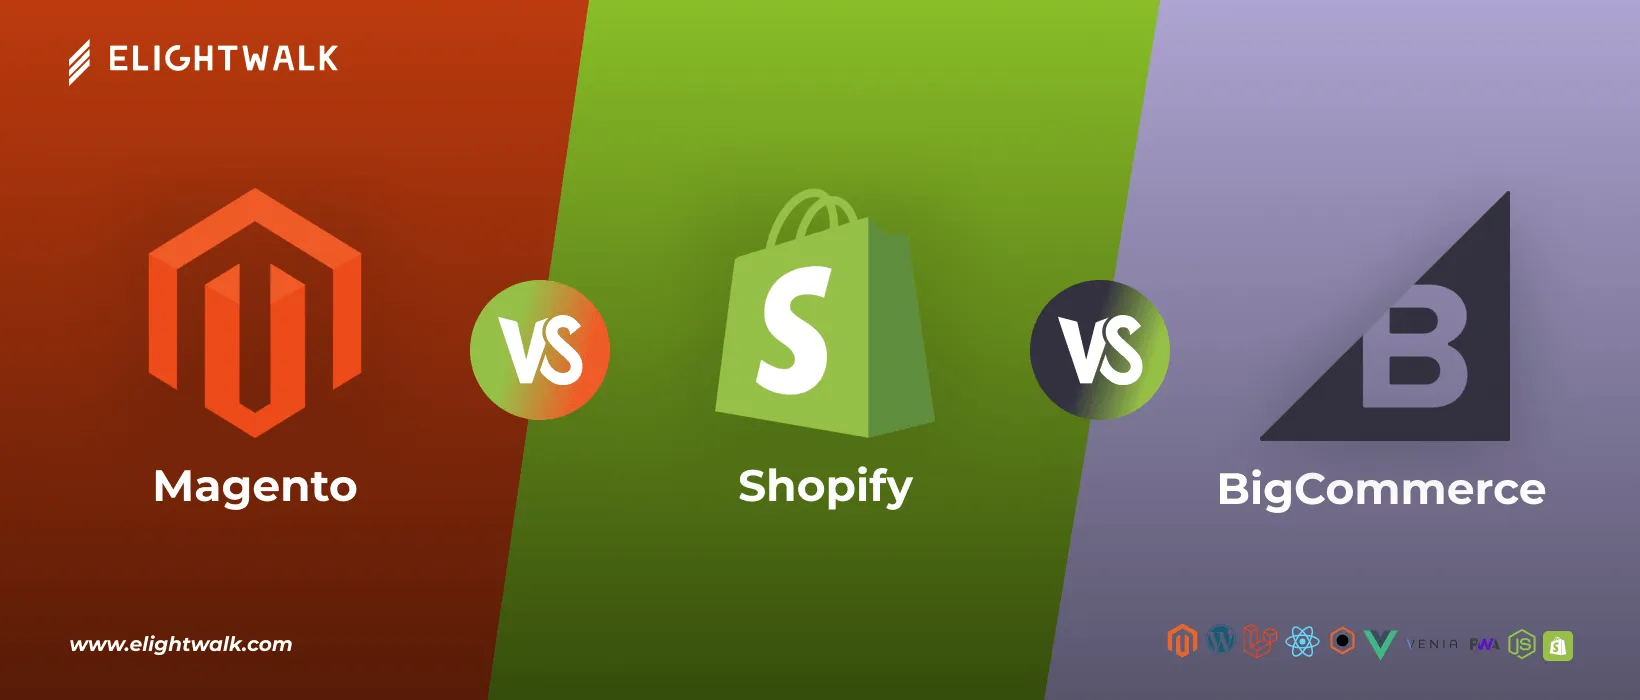 Comparision between Magento vs Shopify vs BigCommerce